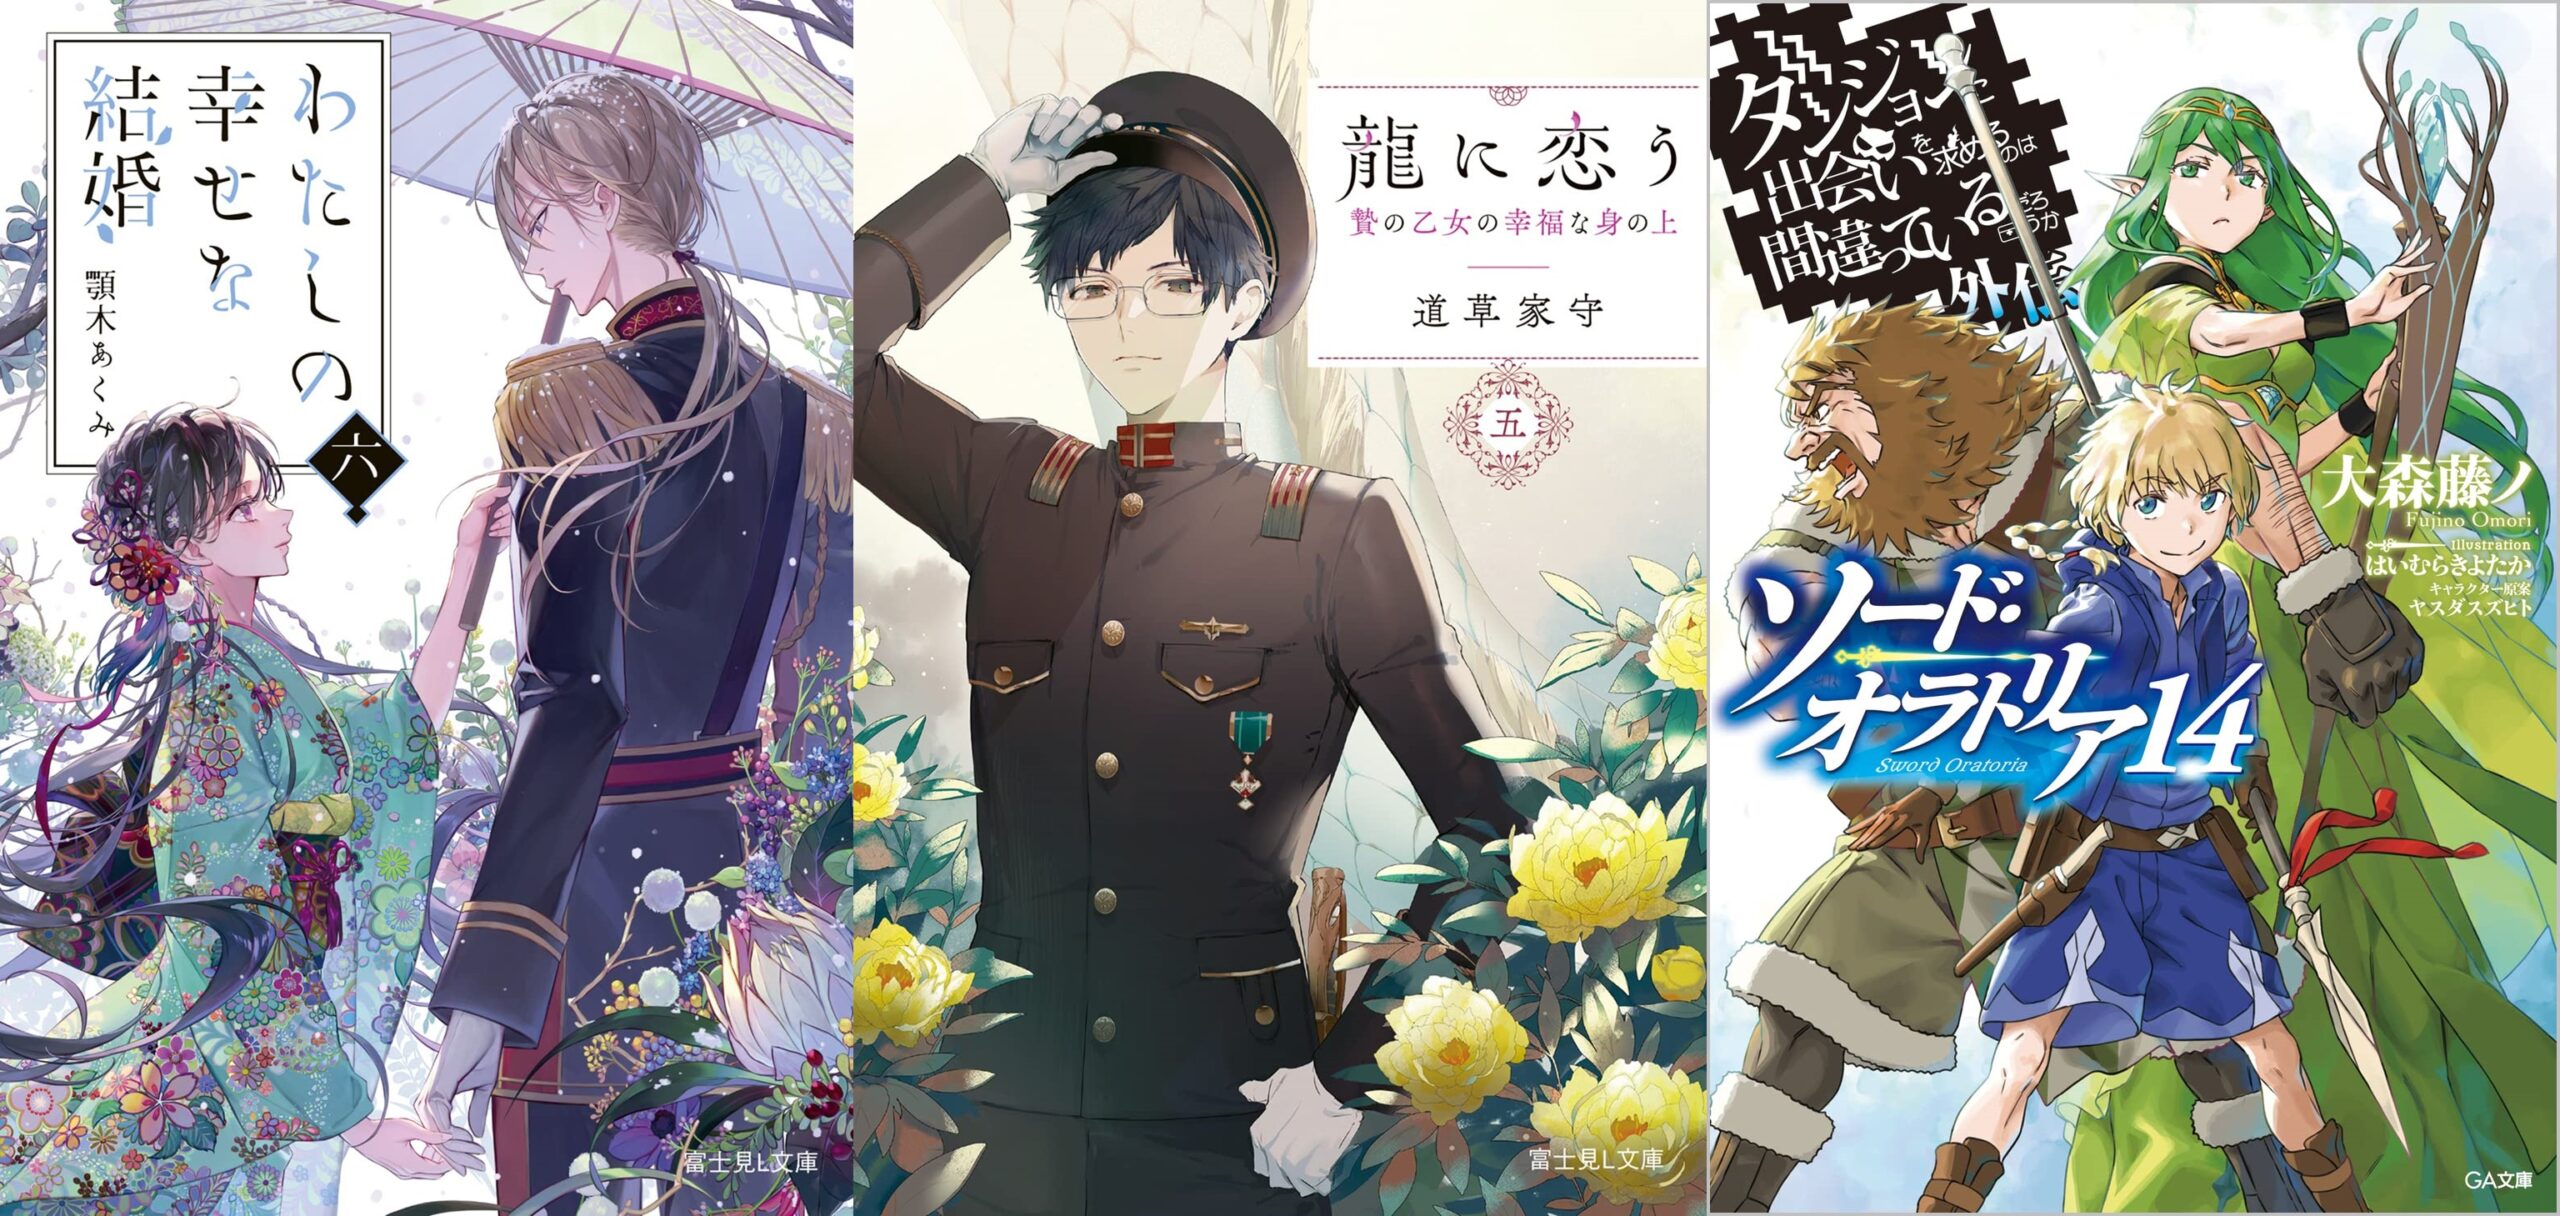 Fênix No Sekai: Ranking semanal de vendas de Light Novels (24-30